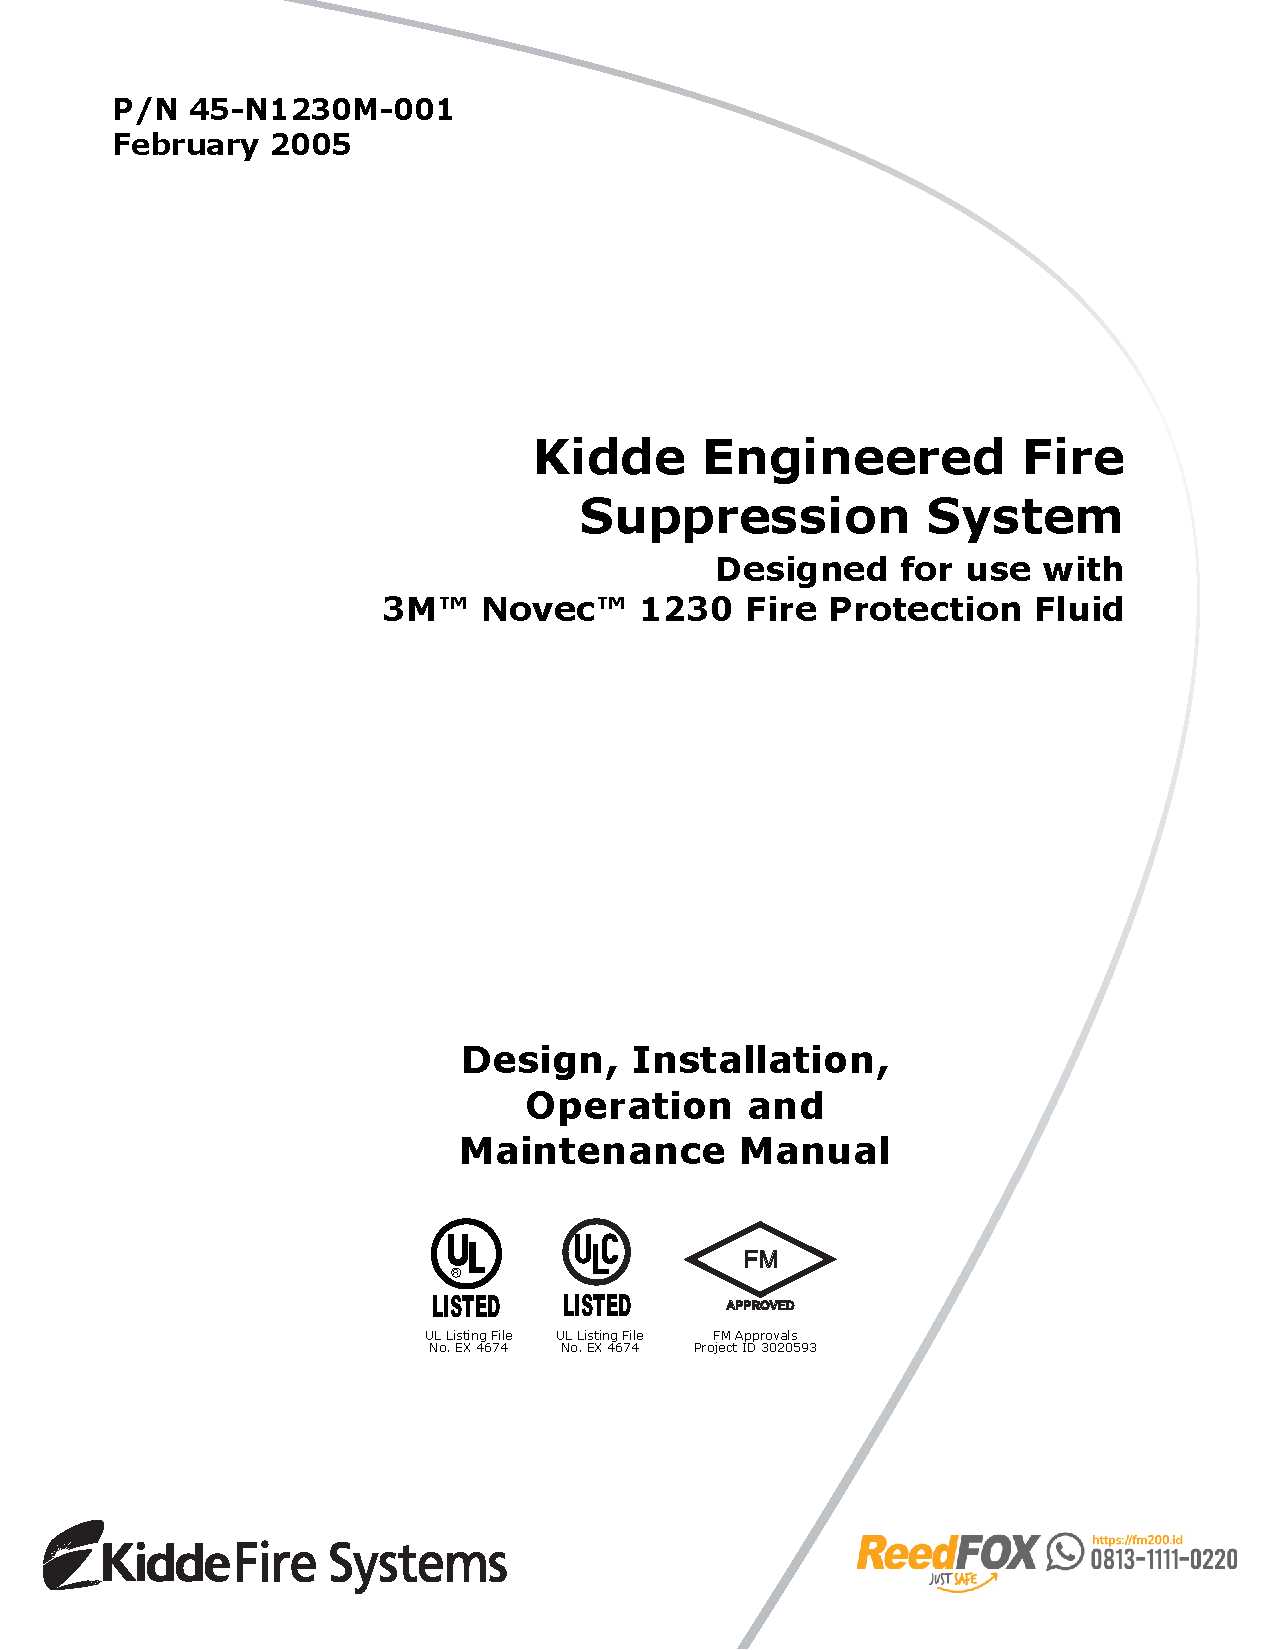 Kidde Fm-200 Manual Pdf